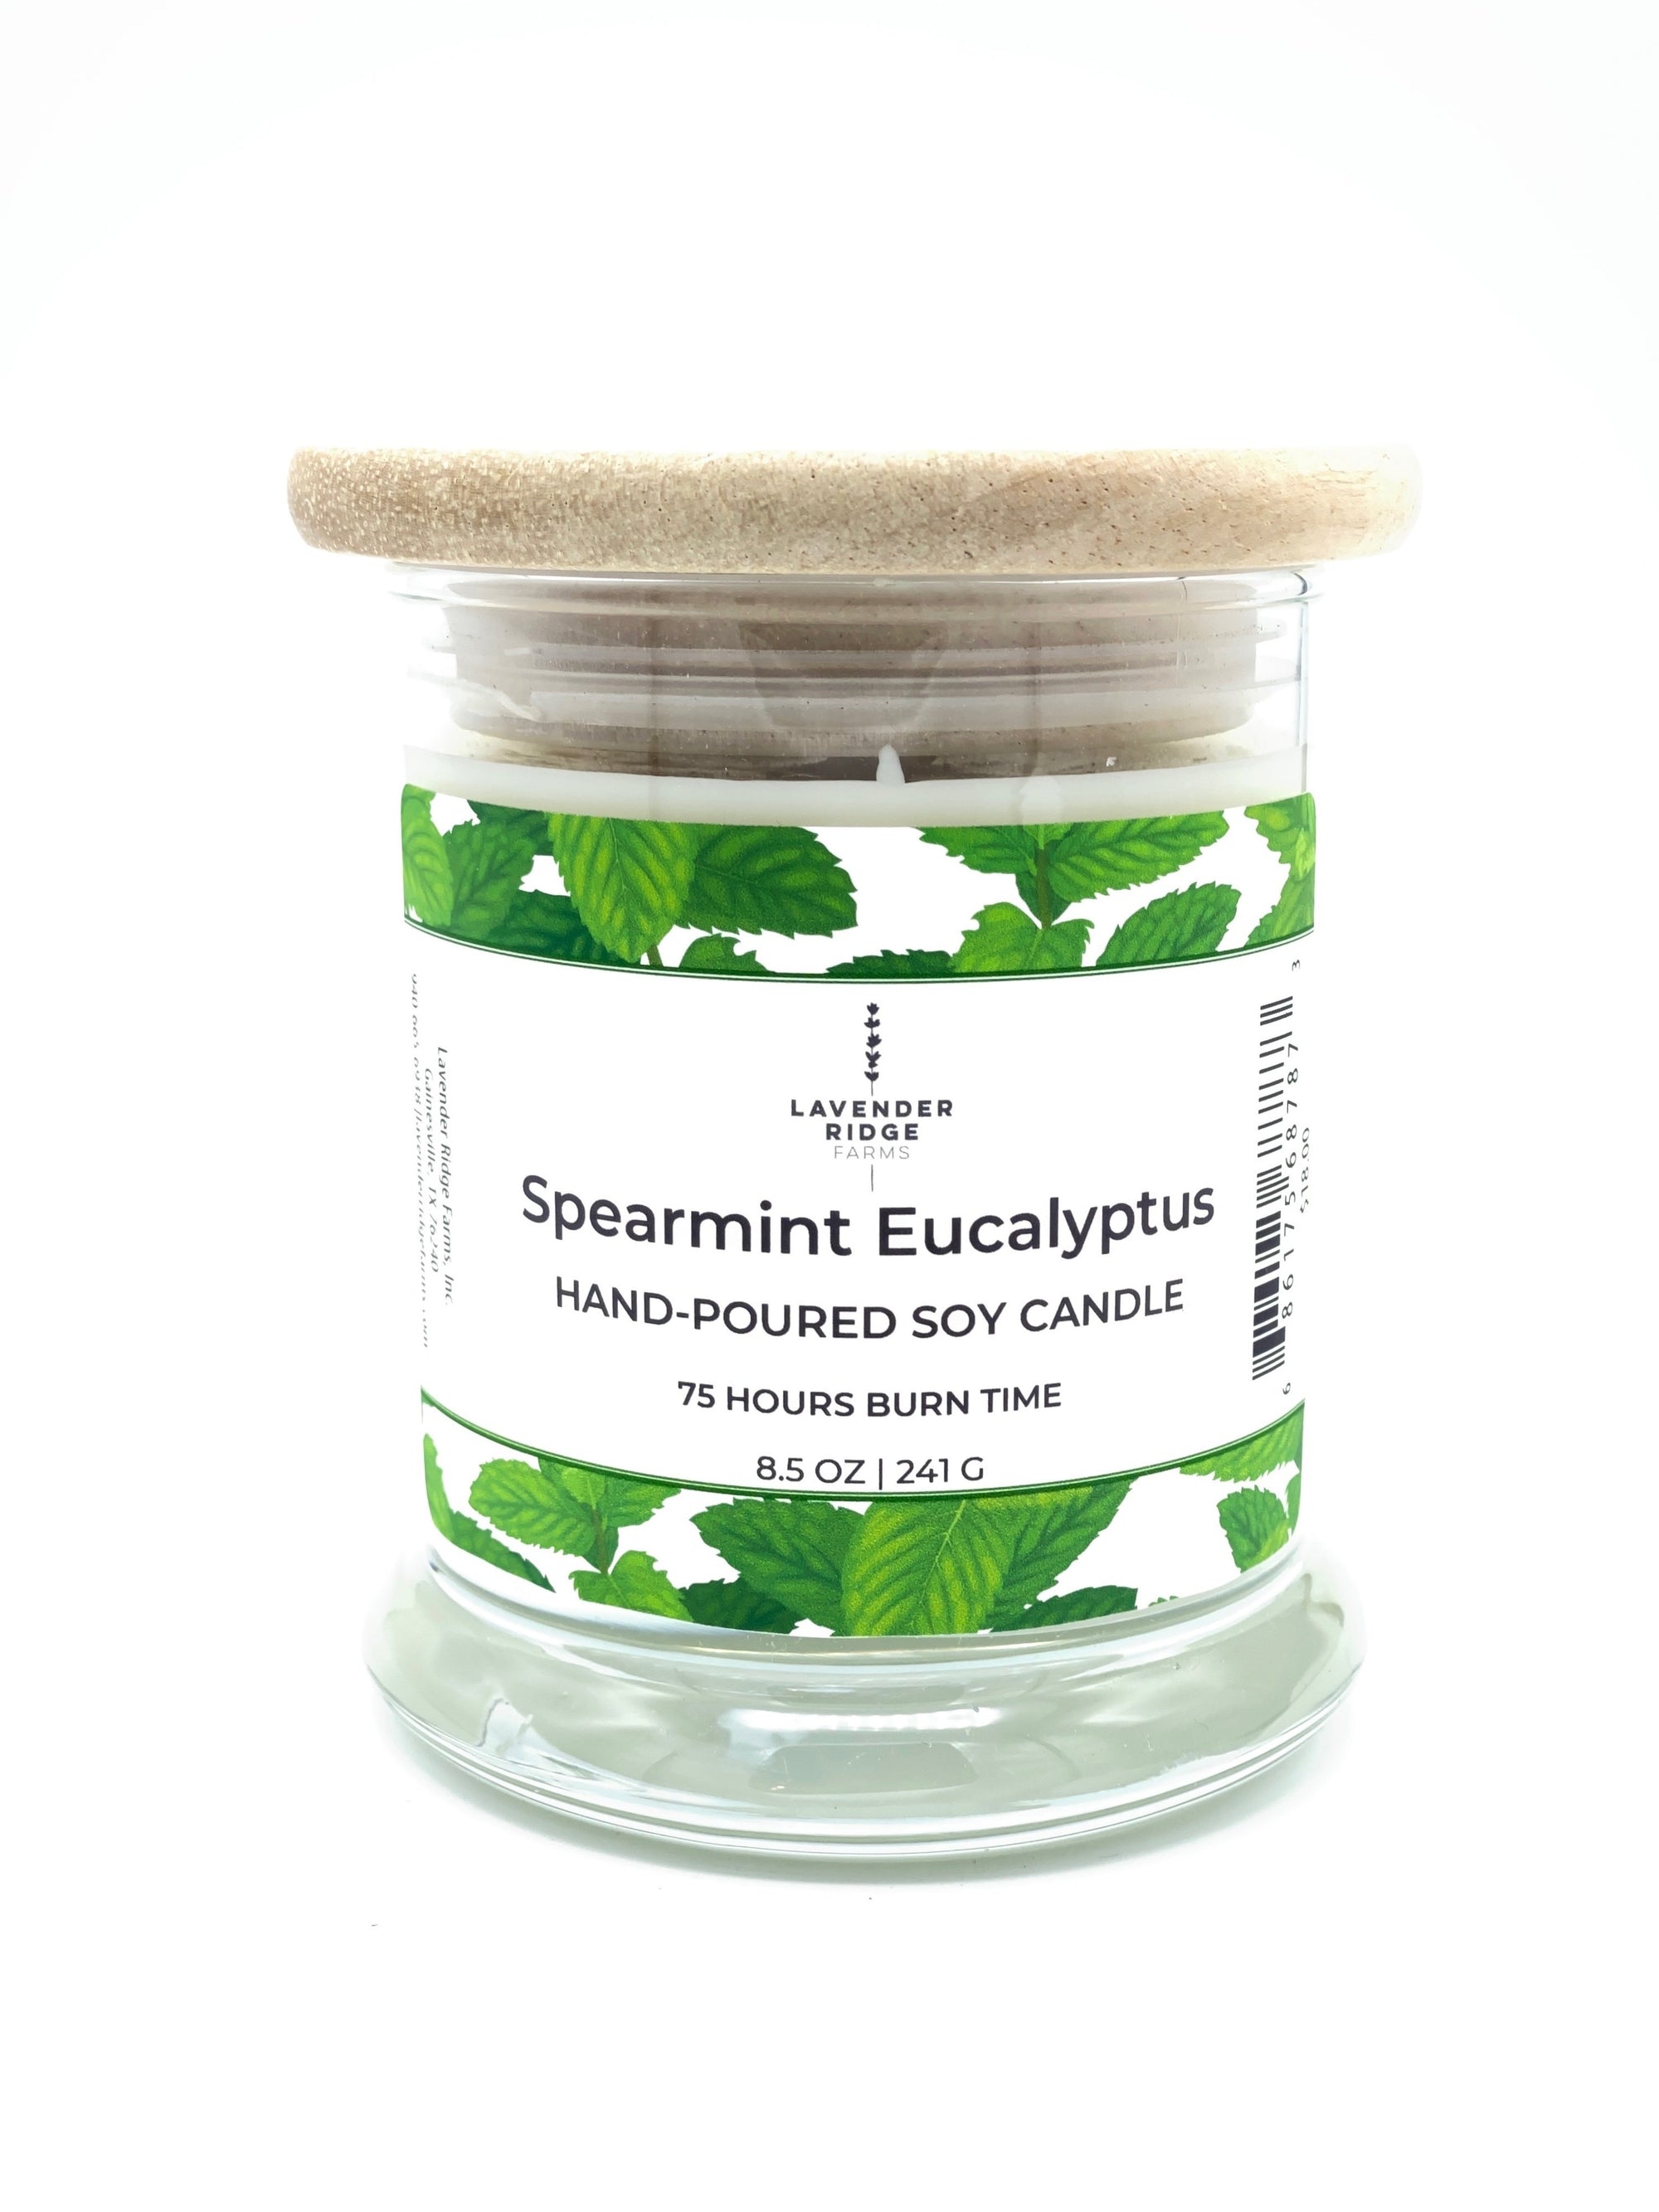 Spearmint Eucalyptus Soy Wax Candle